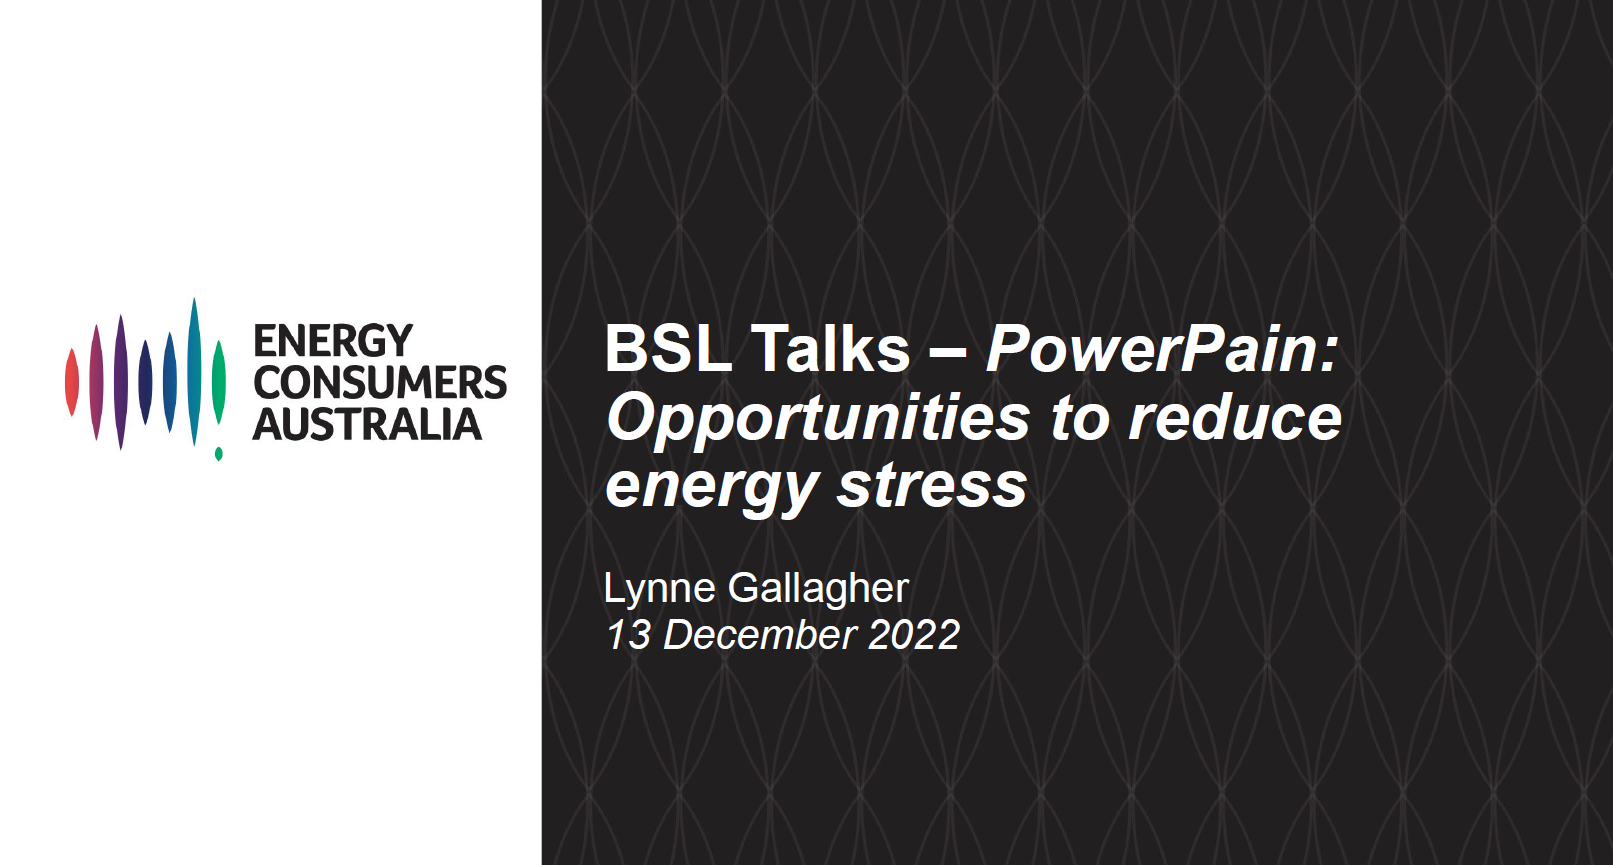 BSL Talks – PowerPain: Opportunities to reduce energy stress